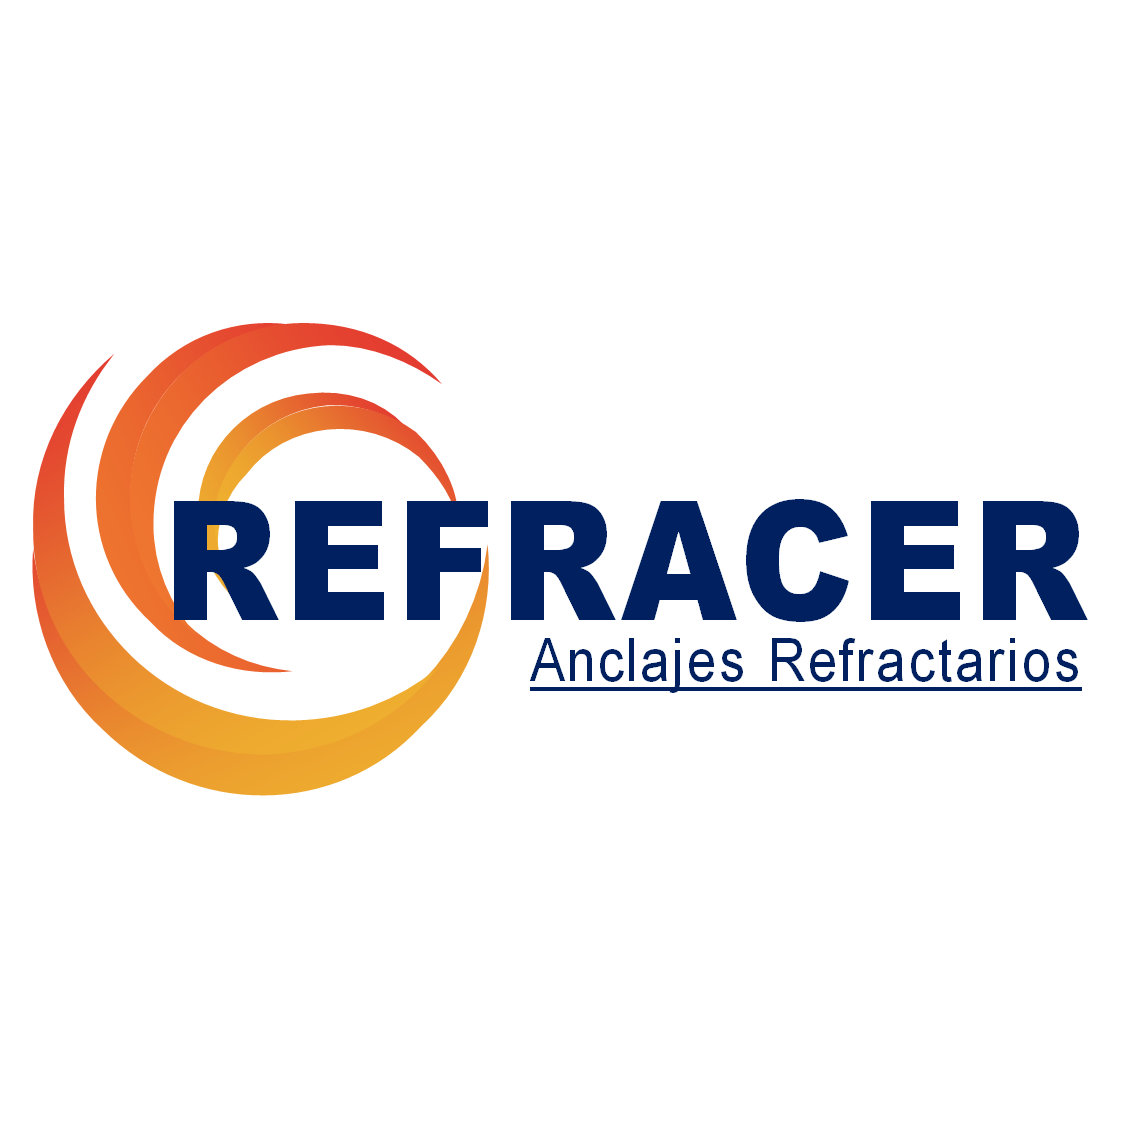 Refracer Anclajes Refractarios S.L Logo